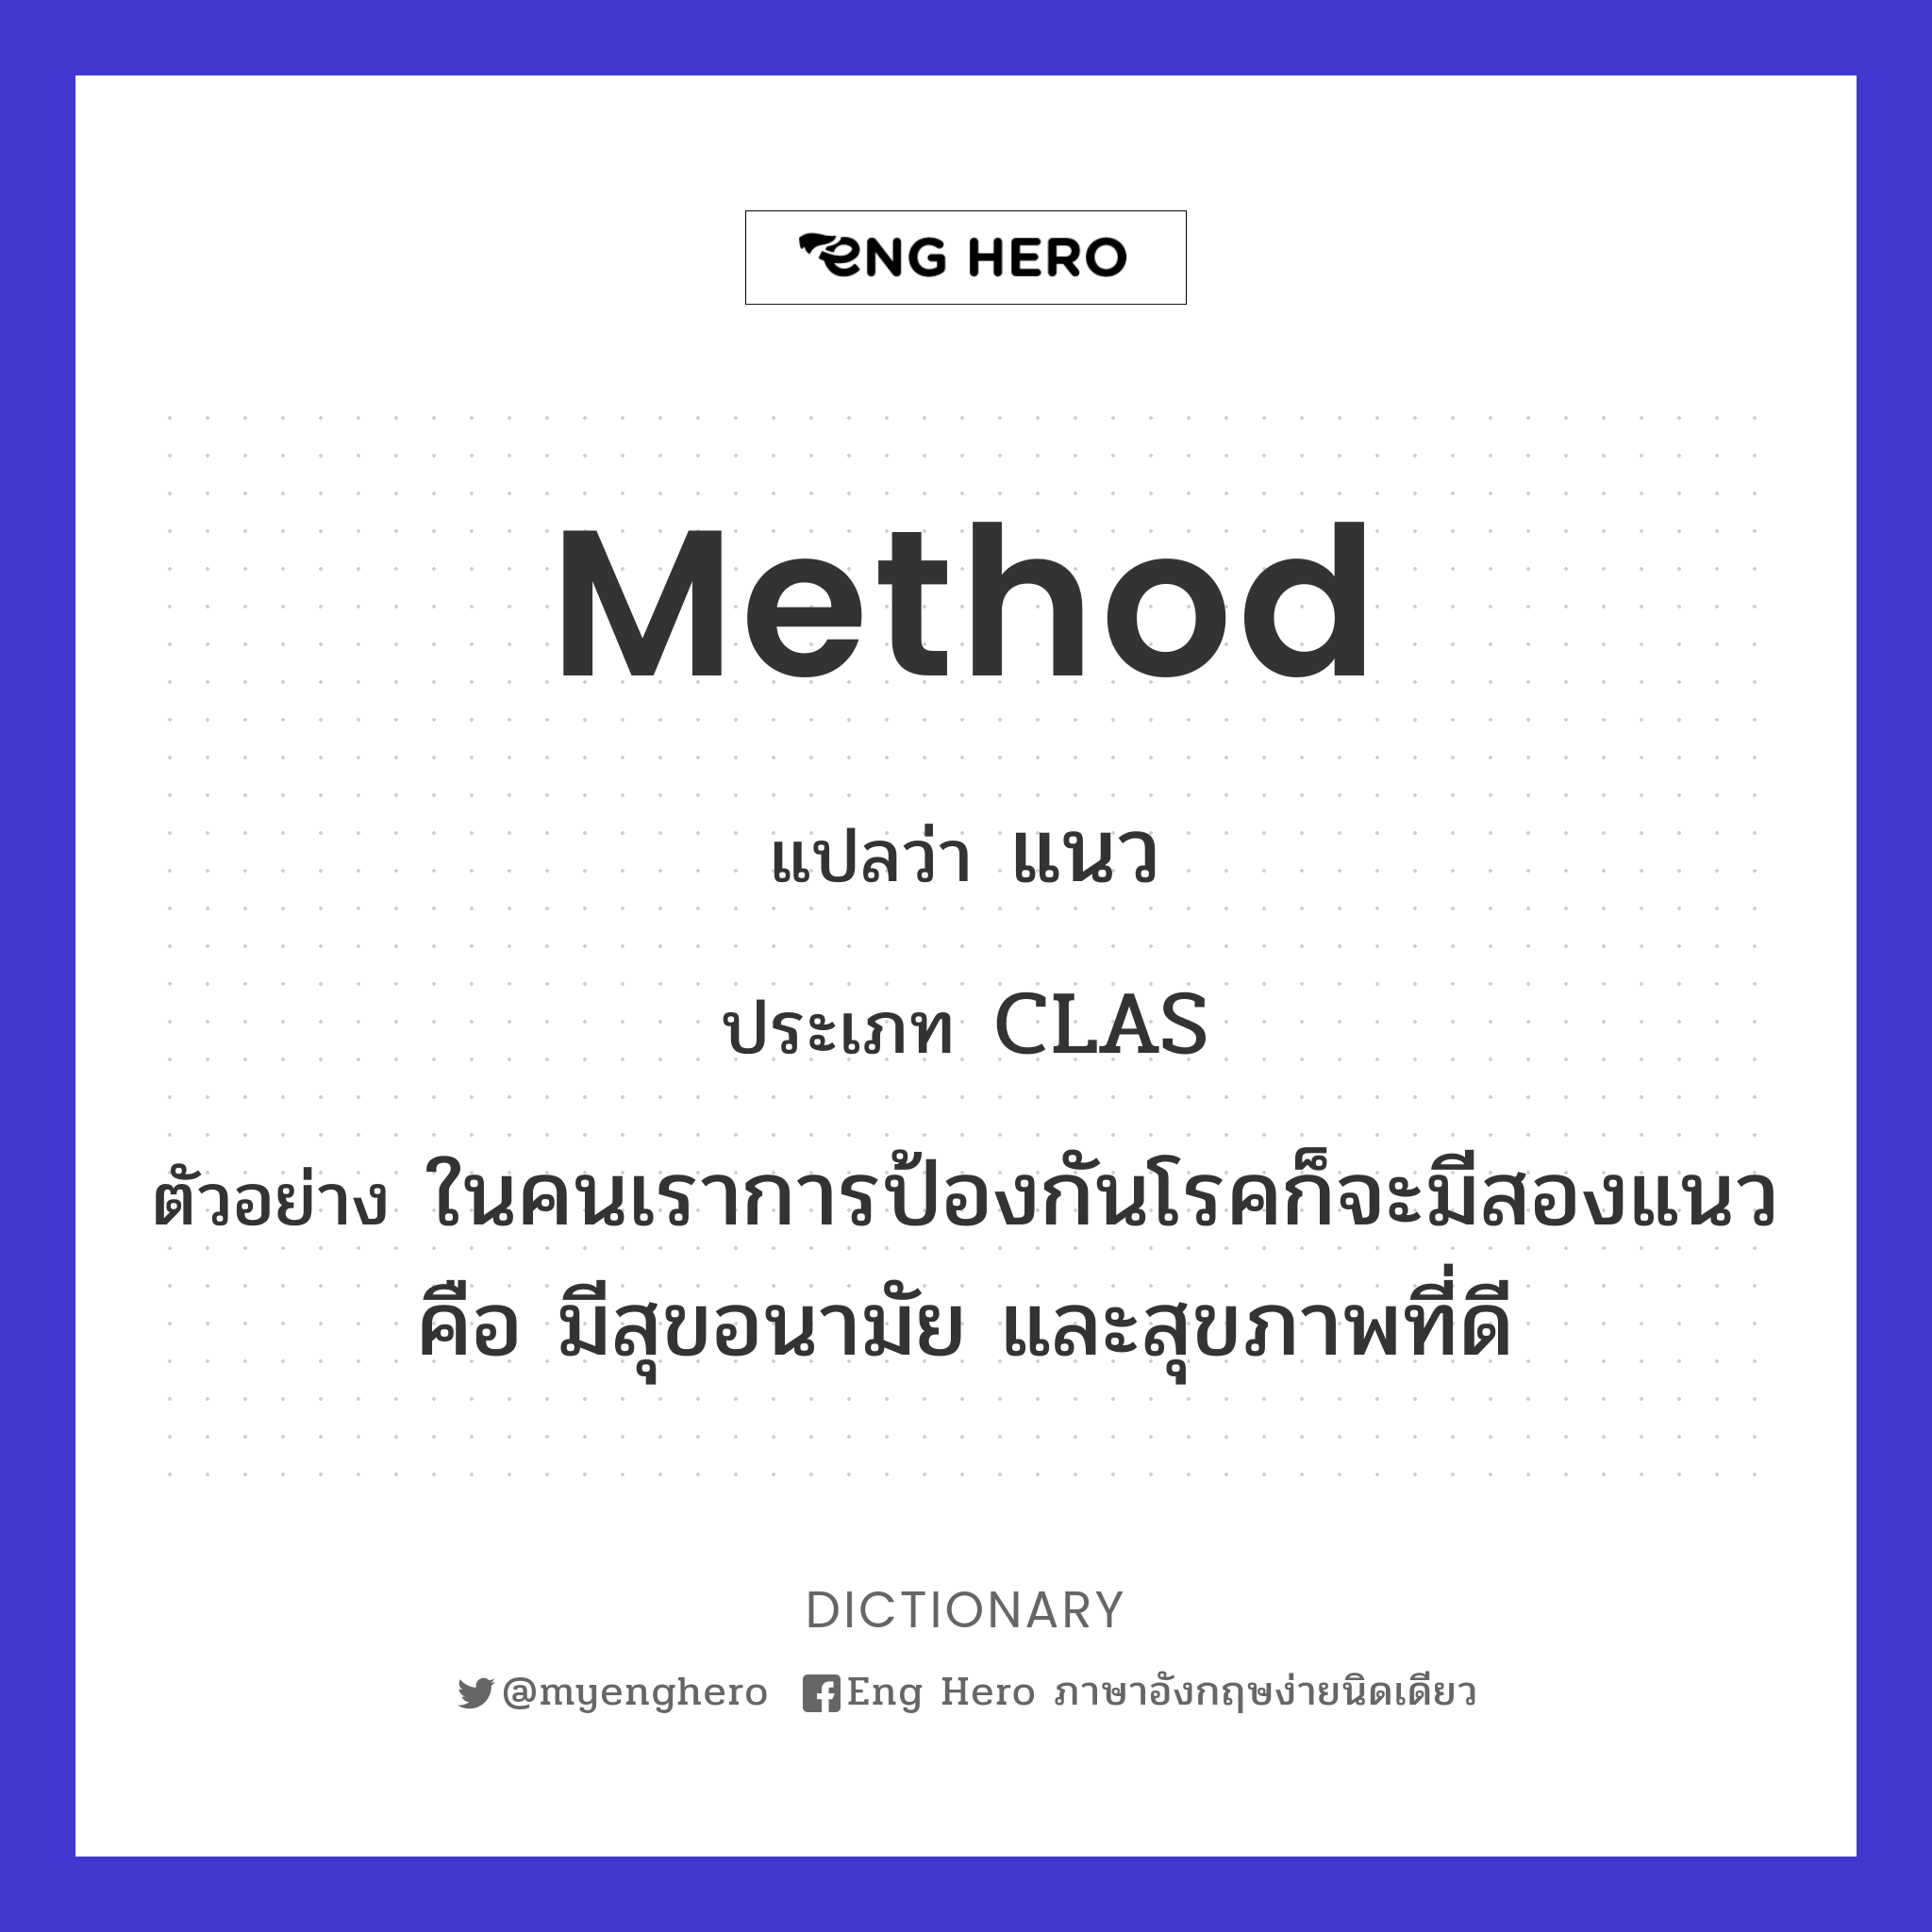 method